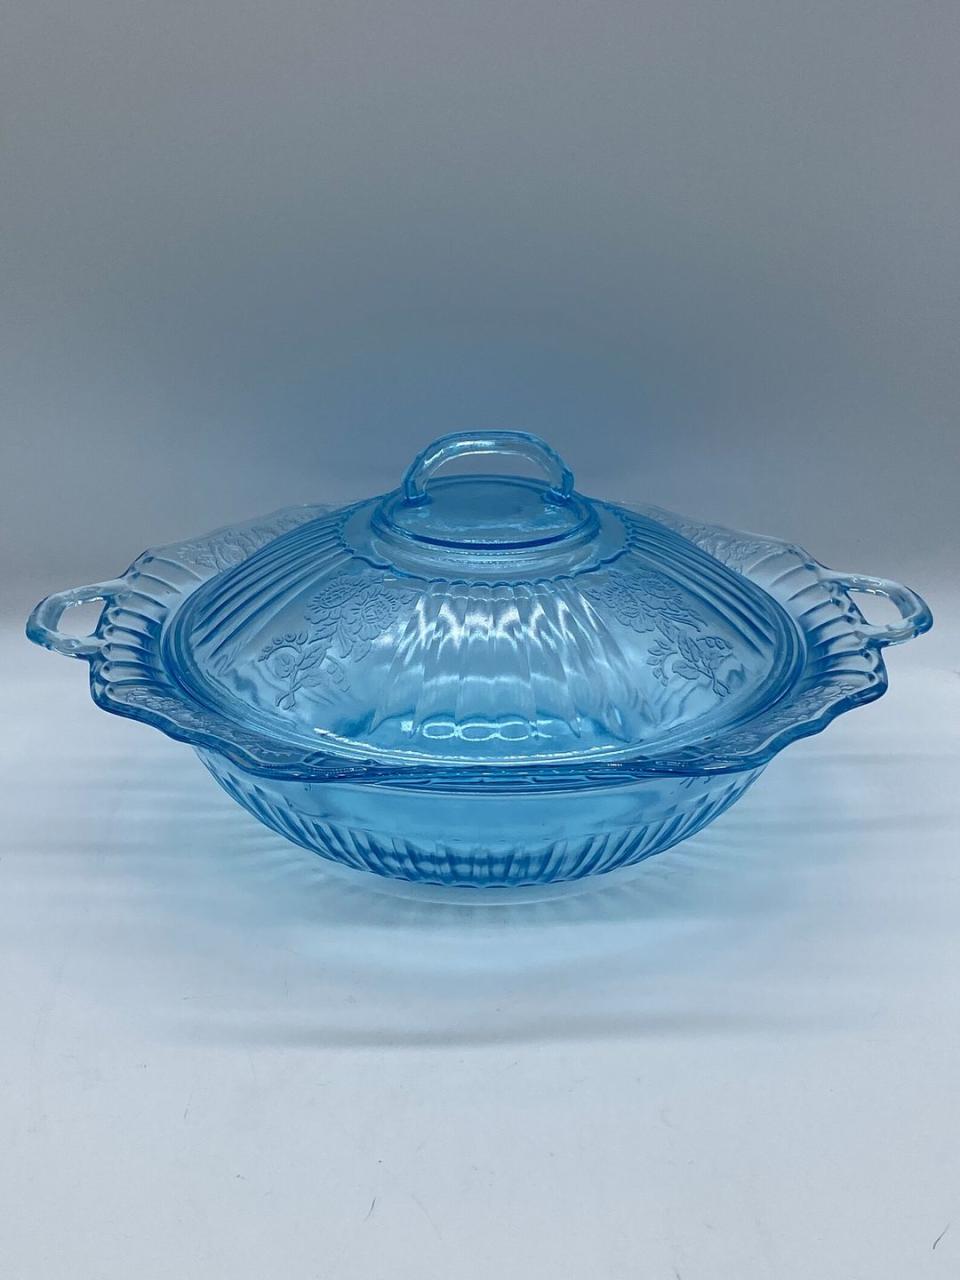 a blue glass bowl